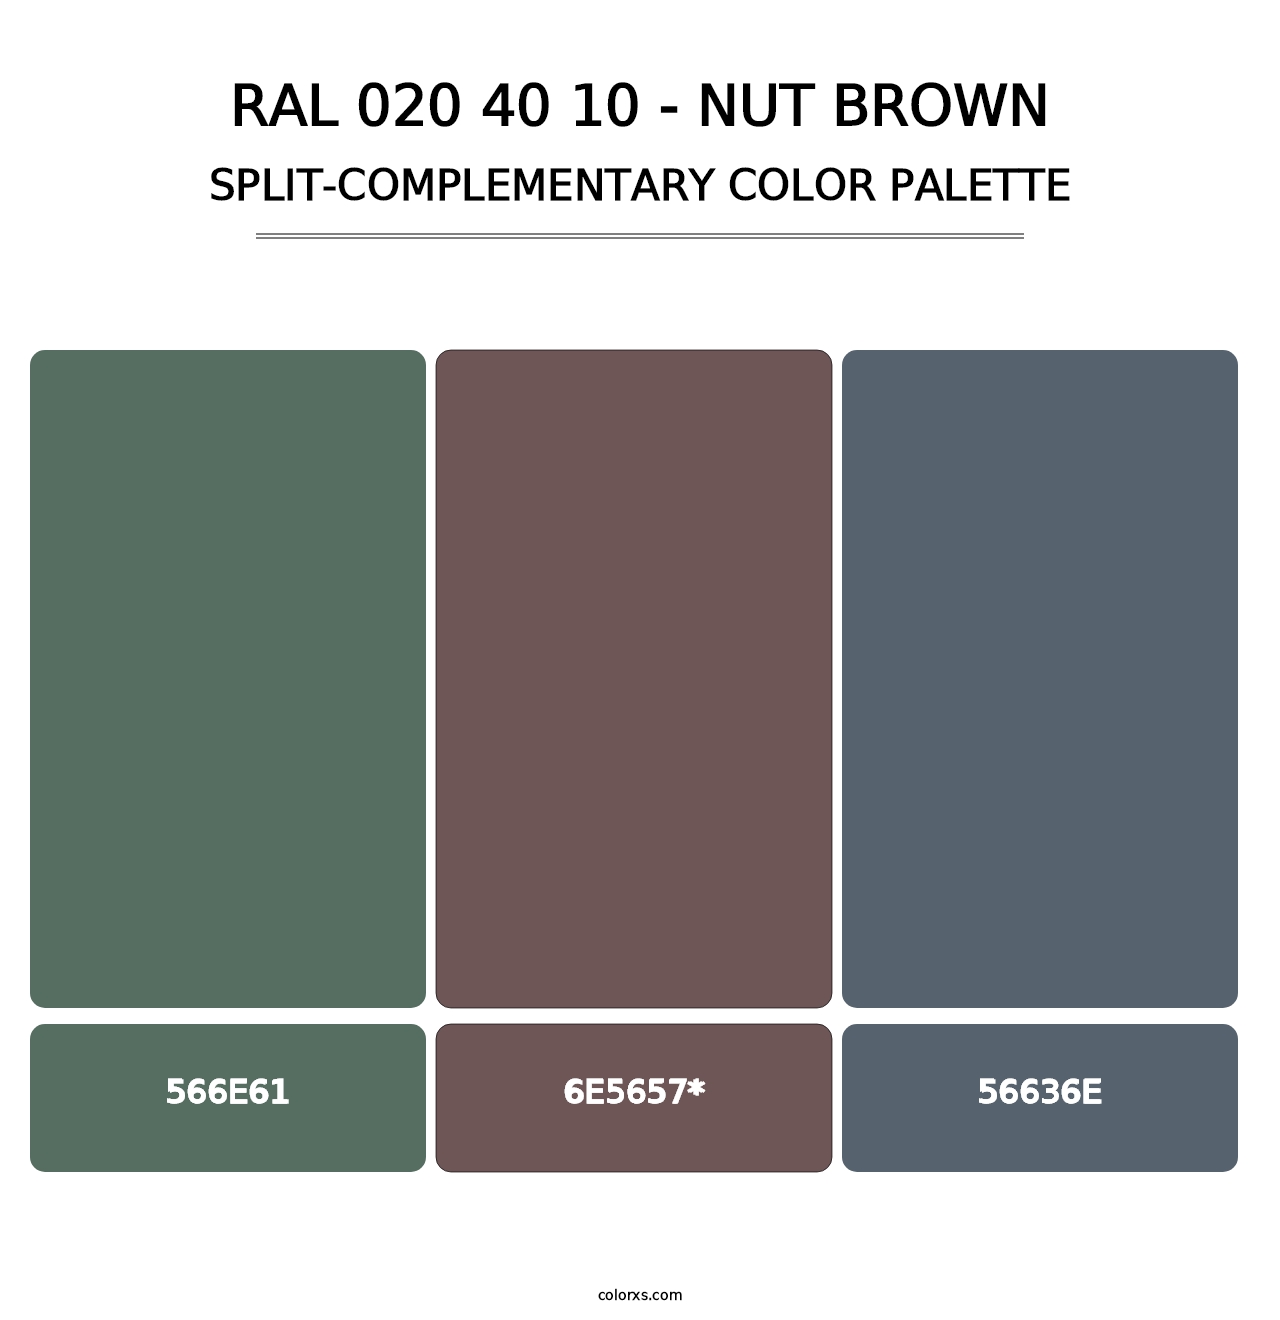 RAL 020 40 10 - Nut Brown - Split-Complementary Color Palette